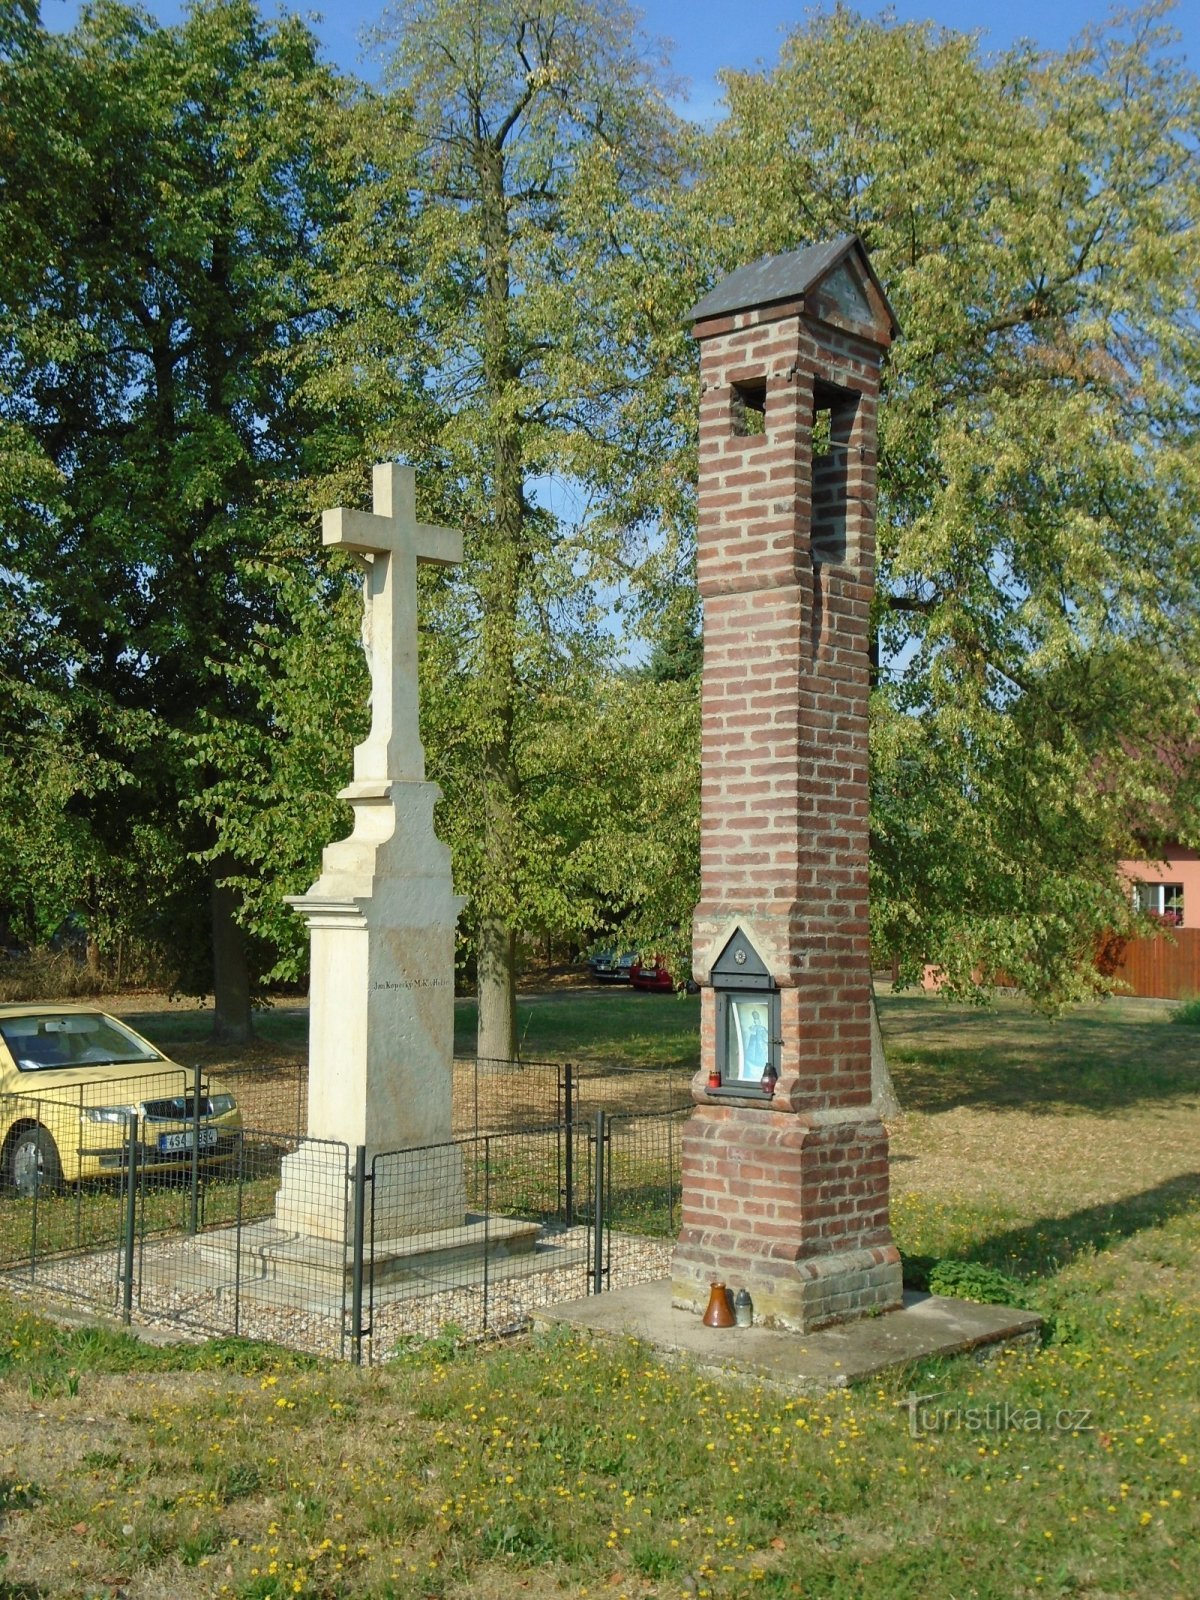 Cross and bell tower (Trnava, 19.8.2018)